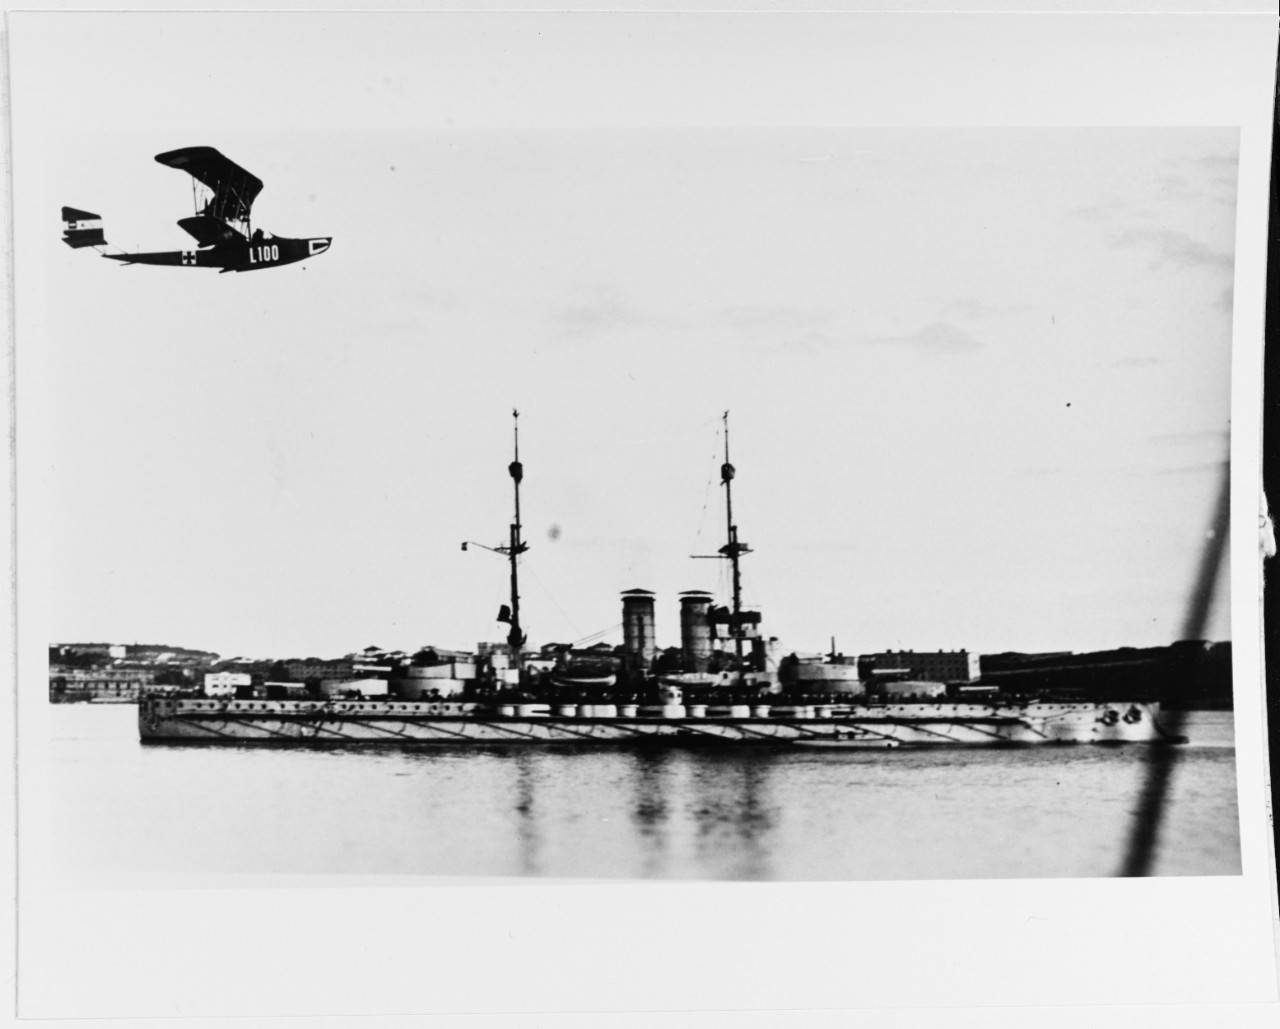 VIRIBUS UNITIS Austrian Battleship, 1911-18